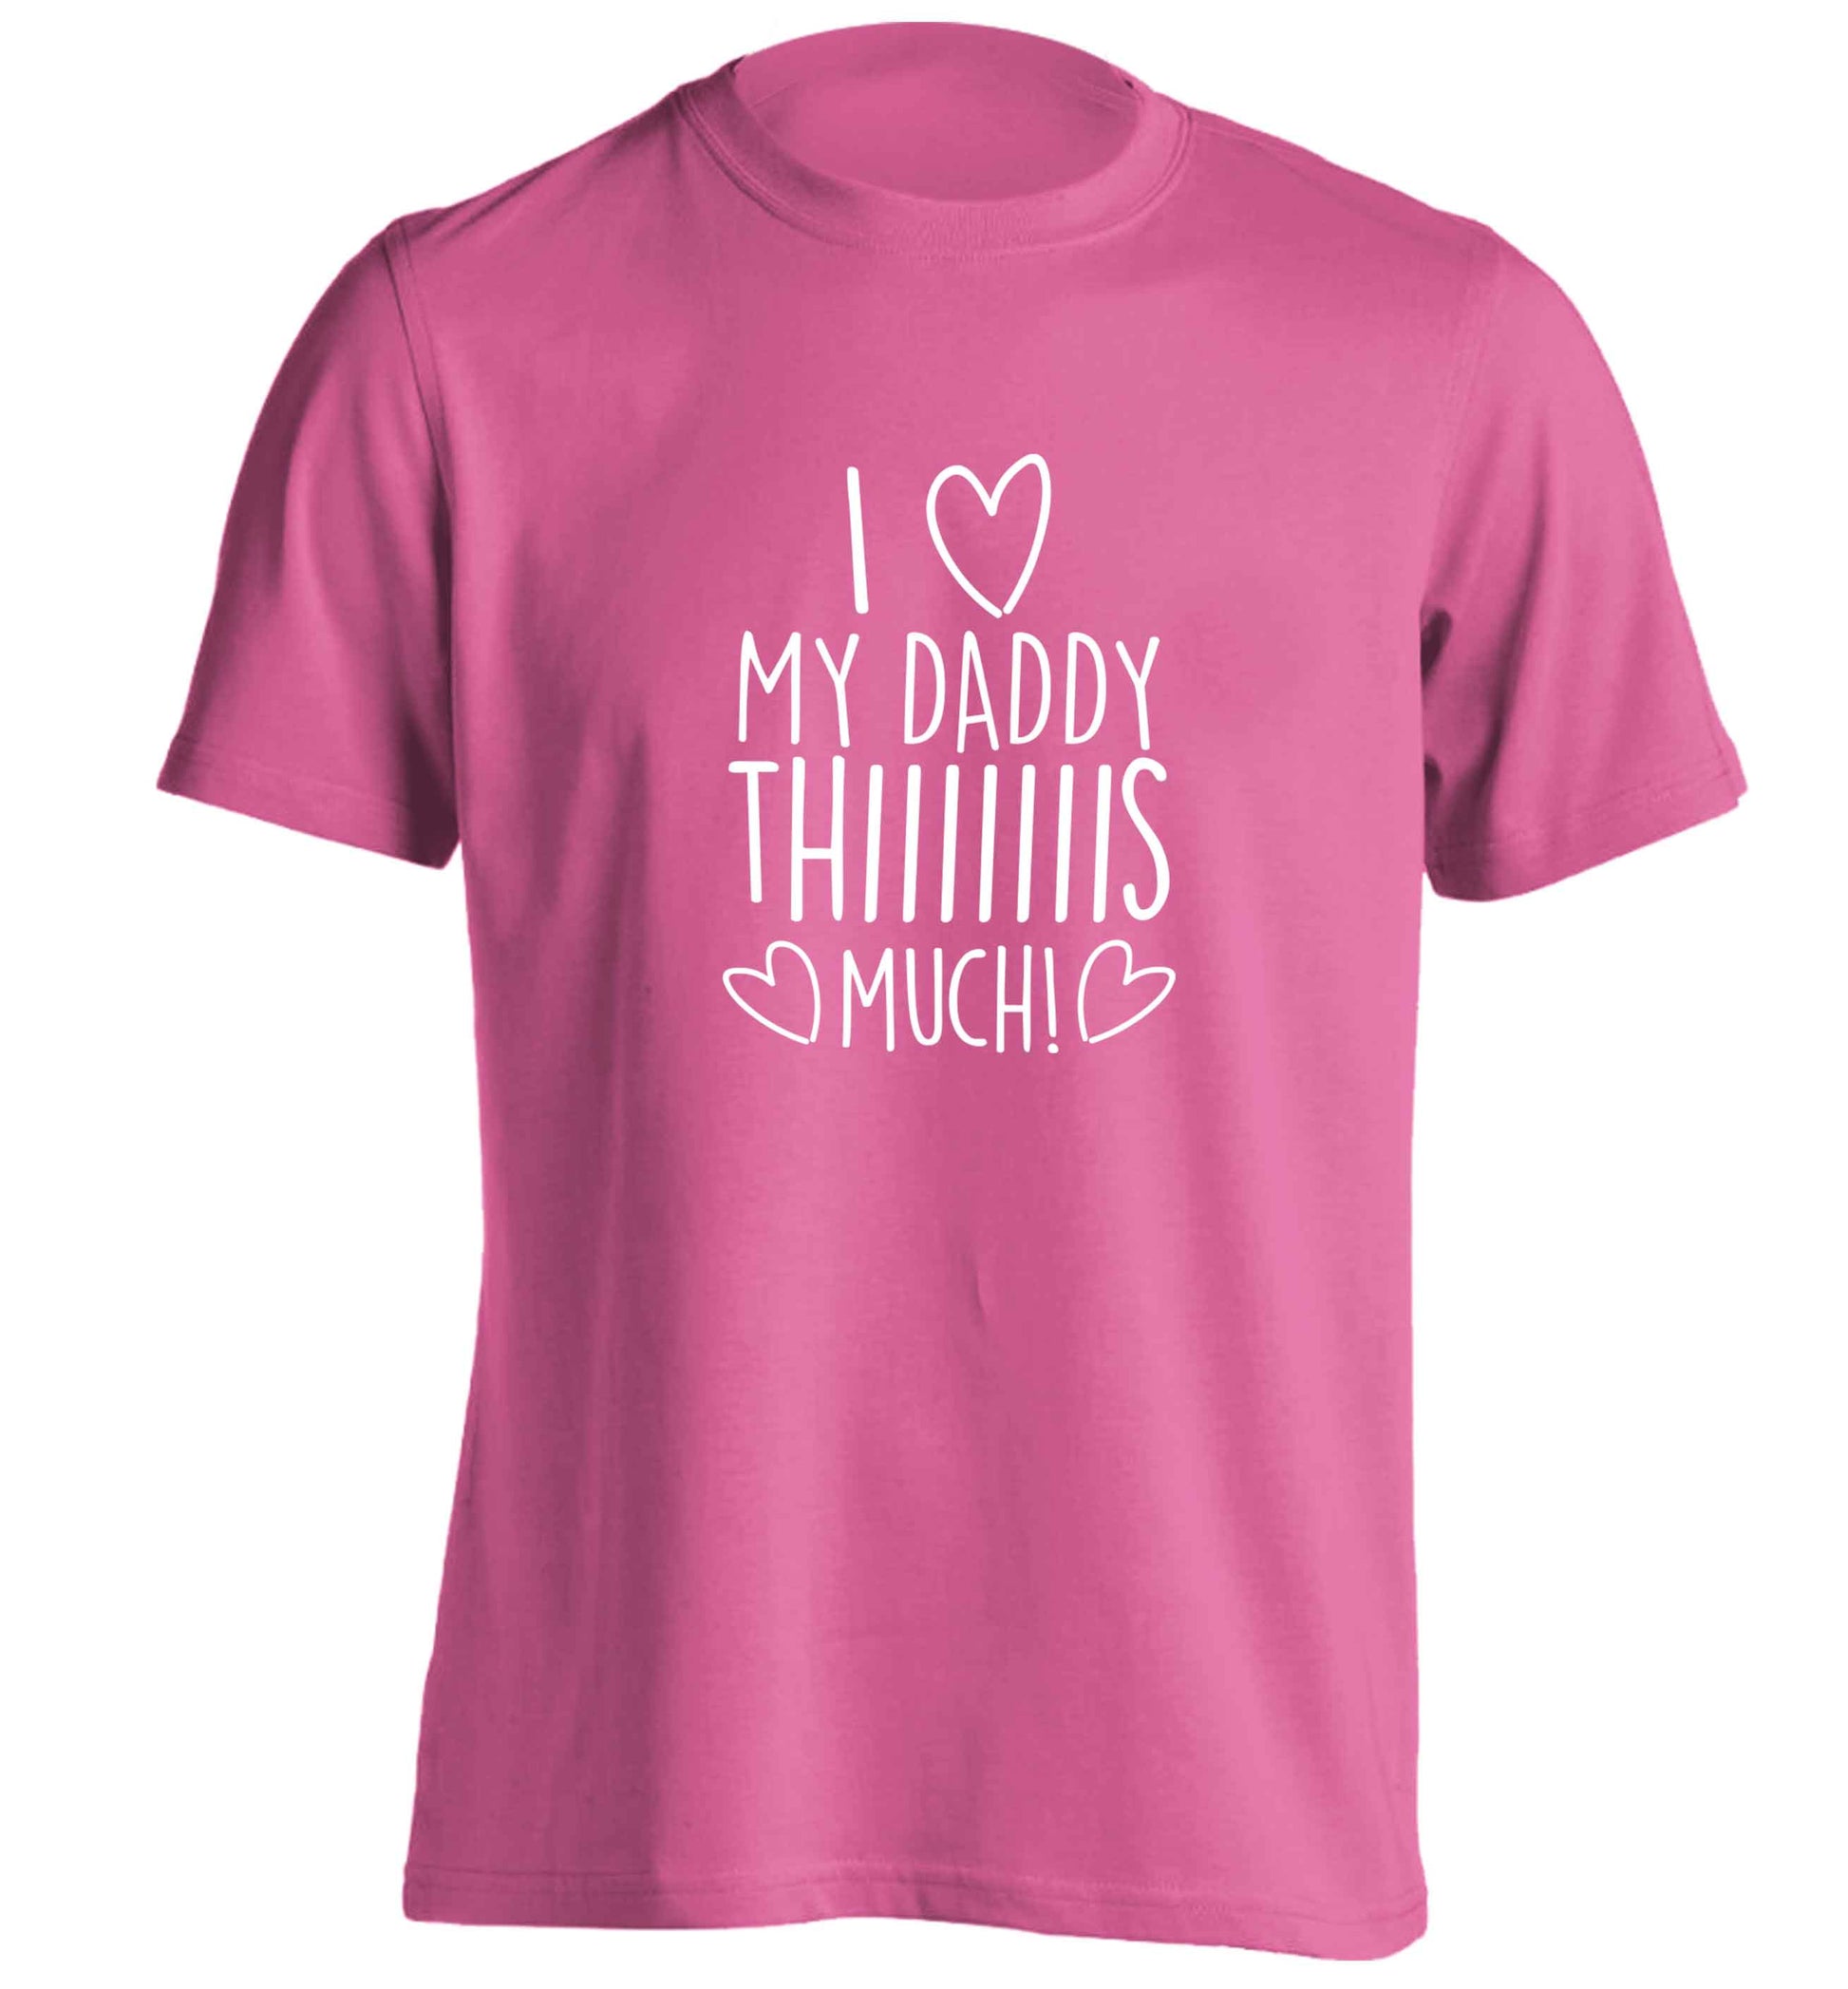 I love my daddy thiiiiis much! adults unisex pink Tshirt 2XL